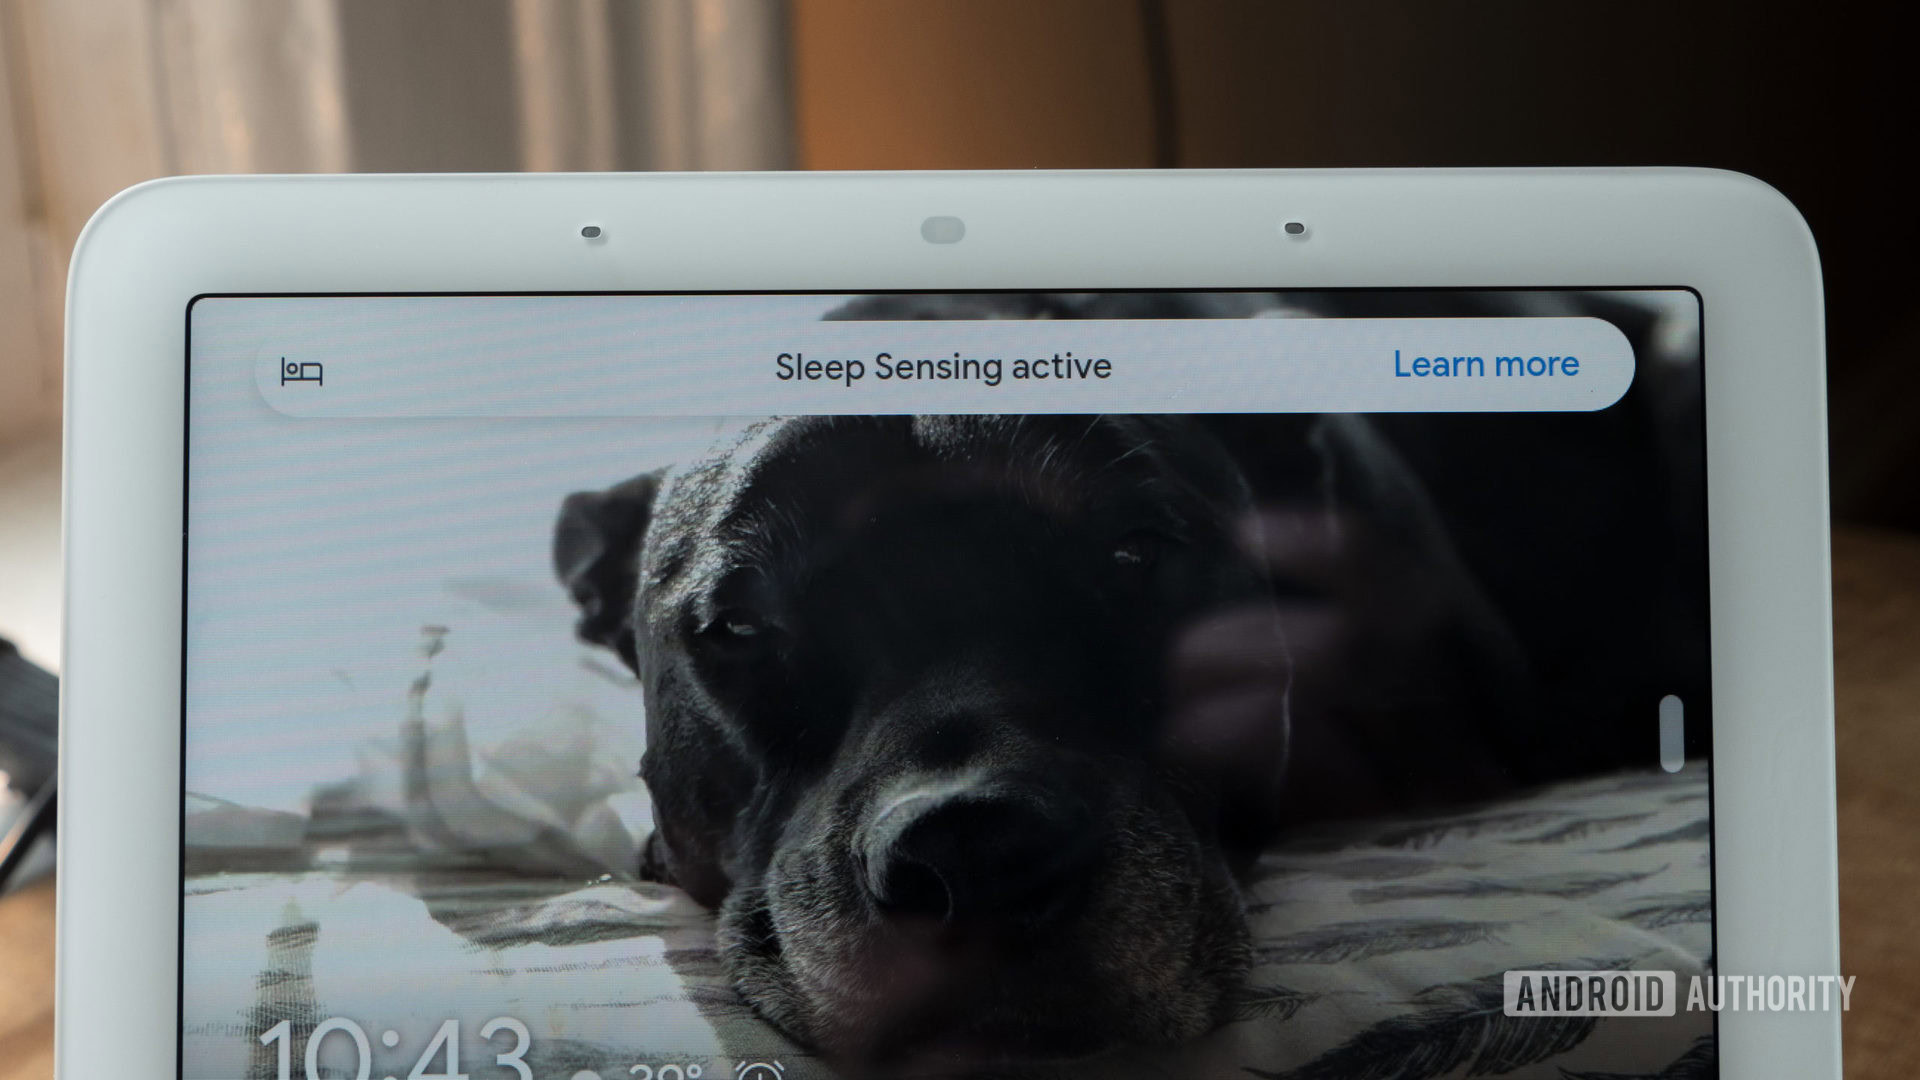 google nest hub second generation review sleep sensing active message